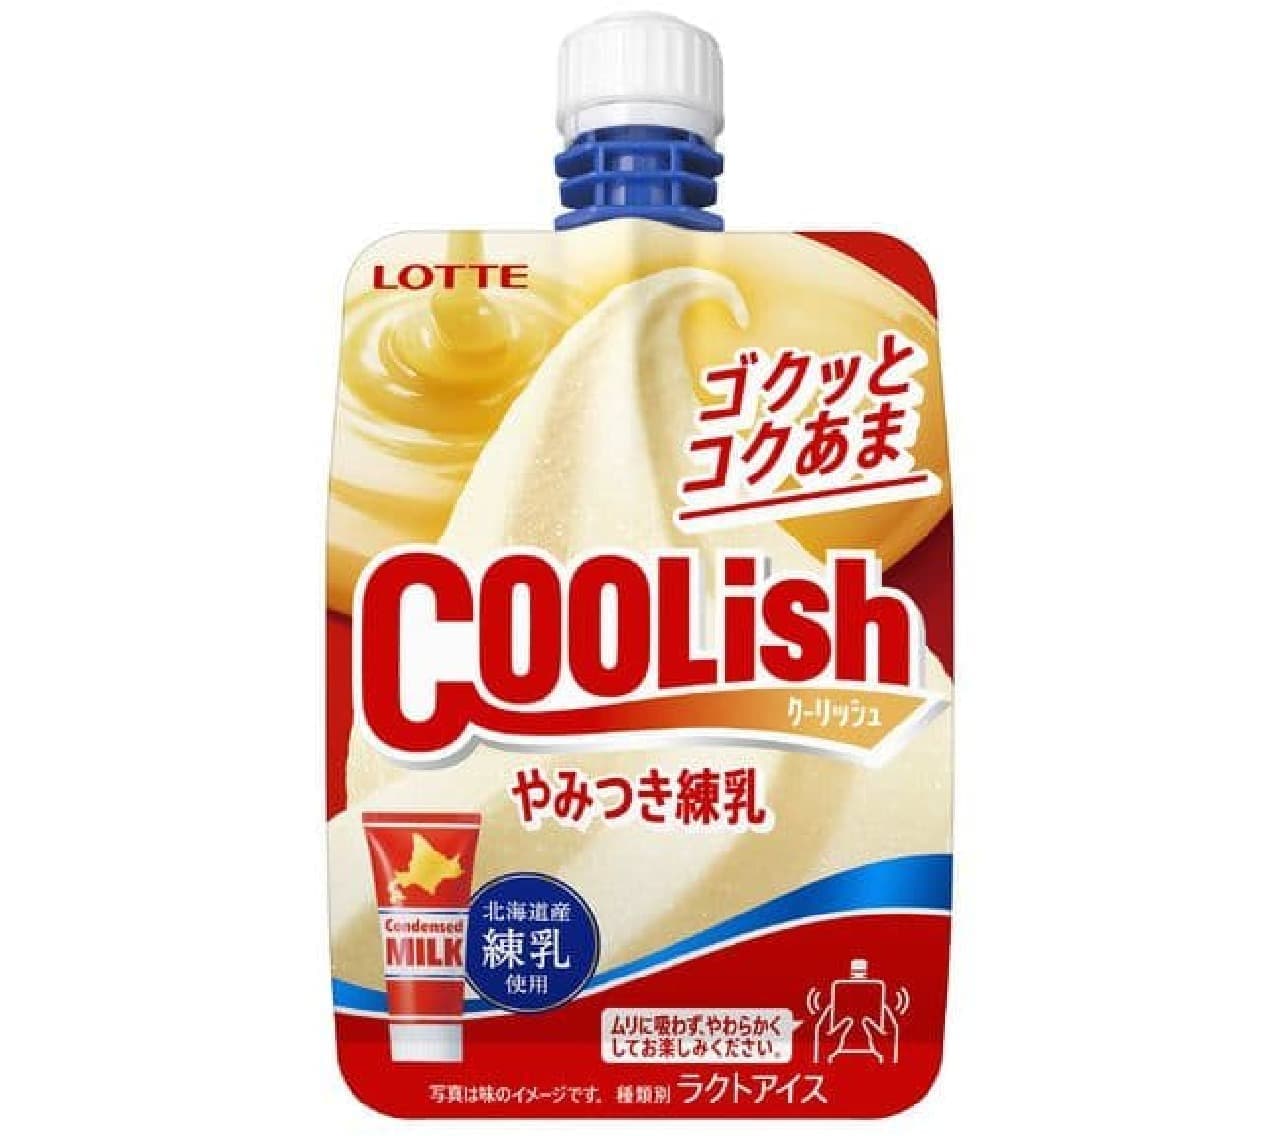 Lotte "Coolish addictive condensed milk"